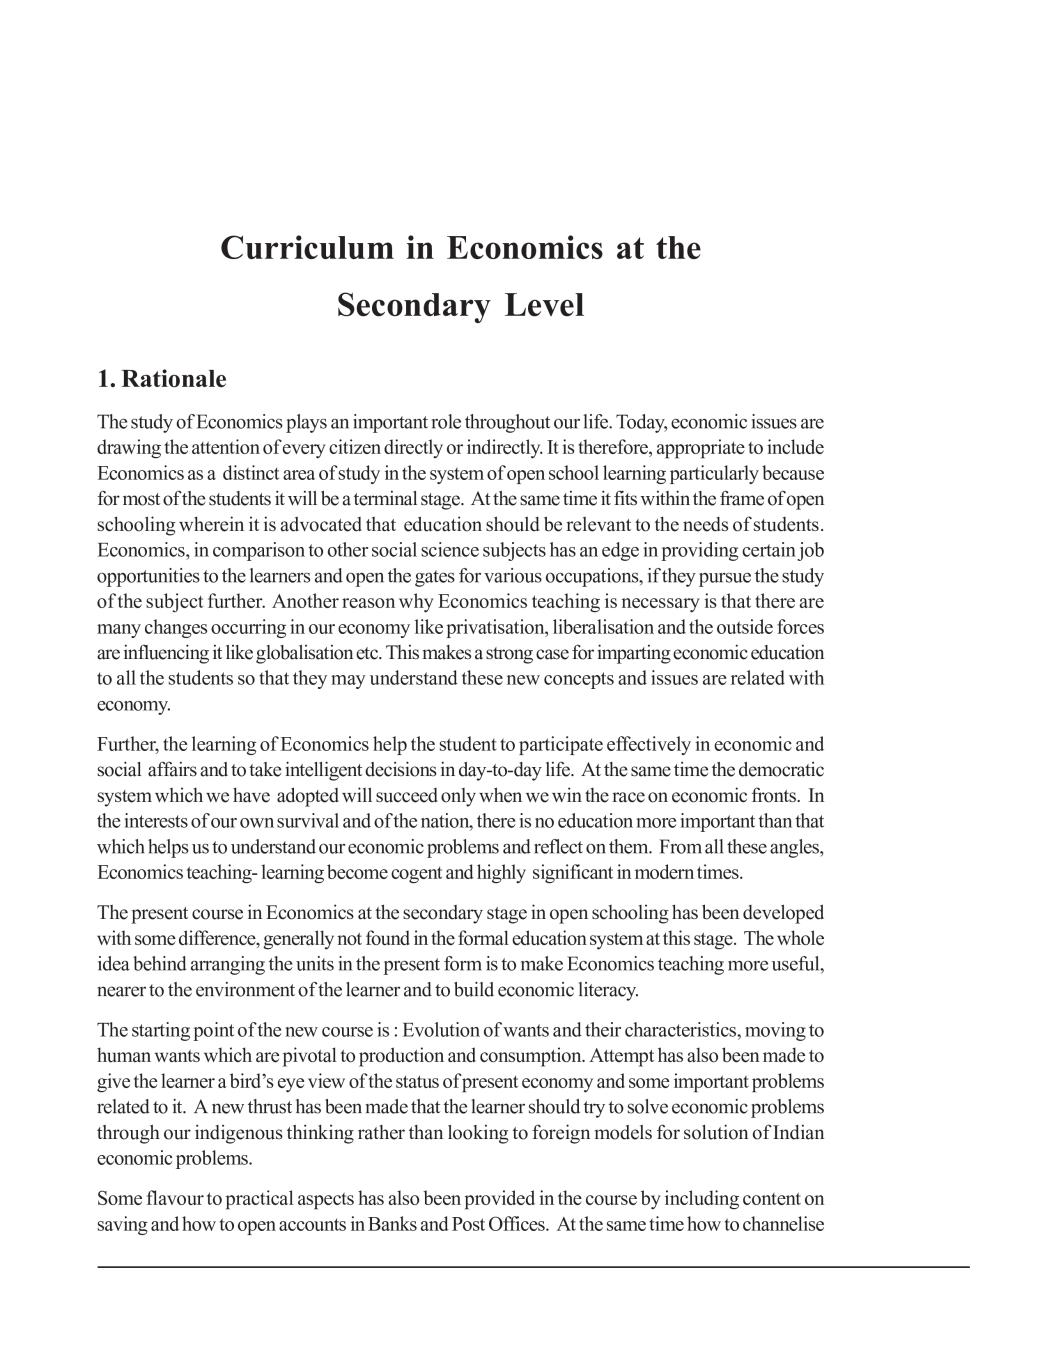 NIOS Class 10 Syllabus - Economics - Page 1